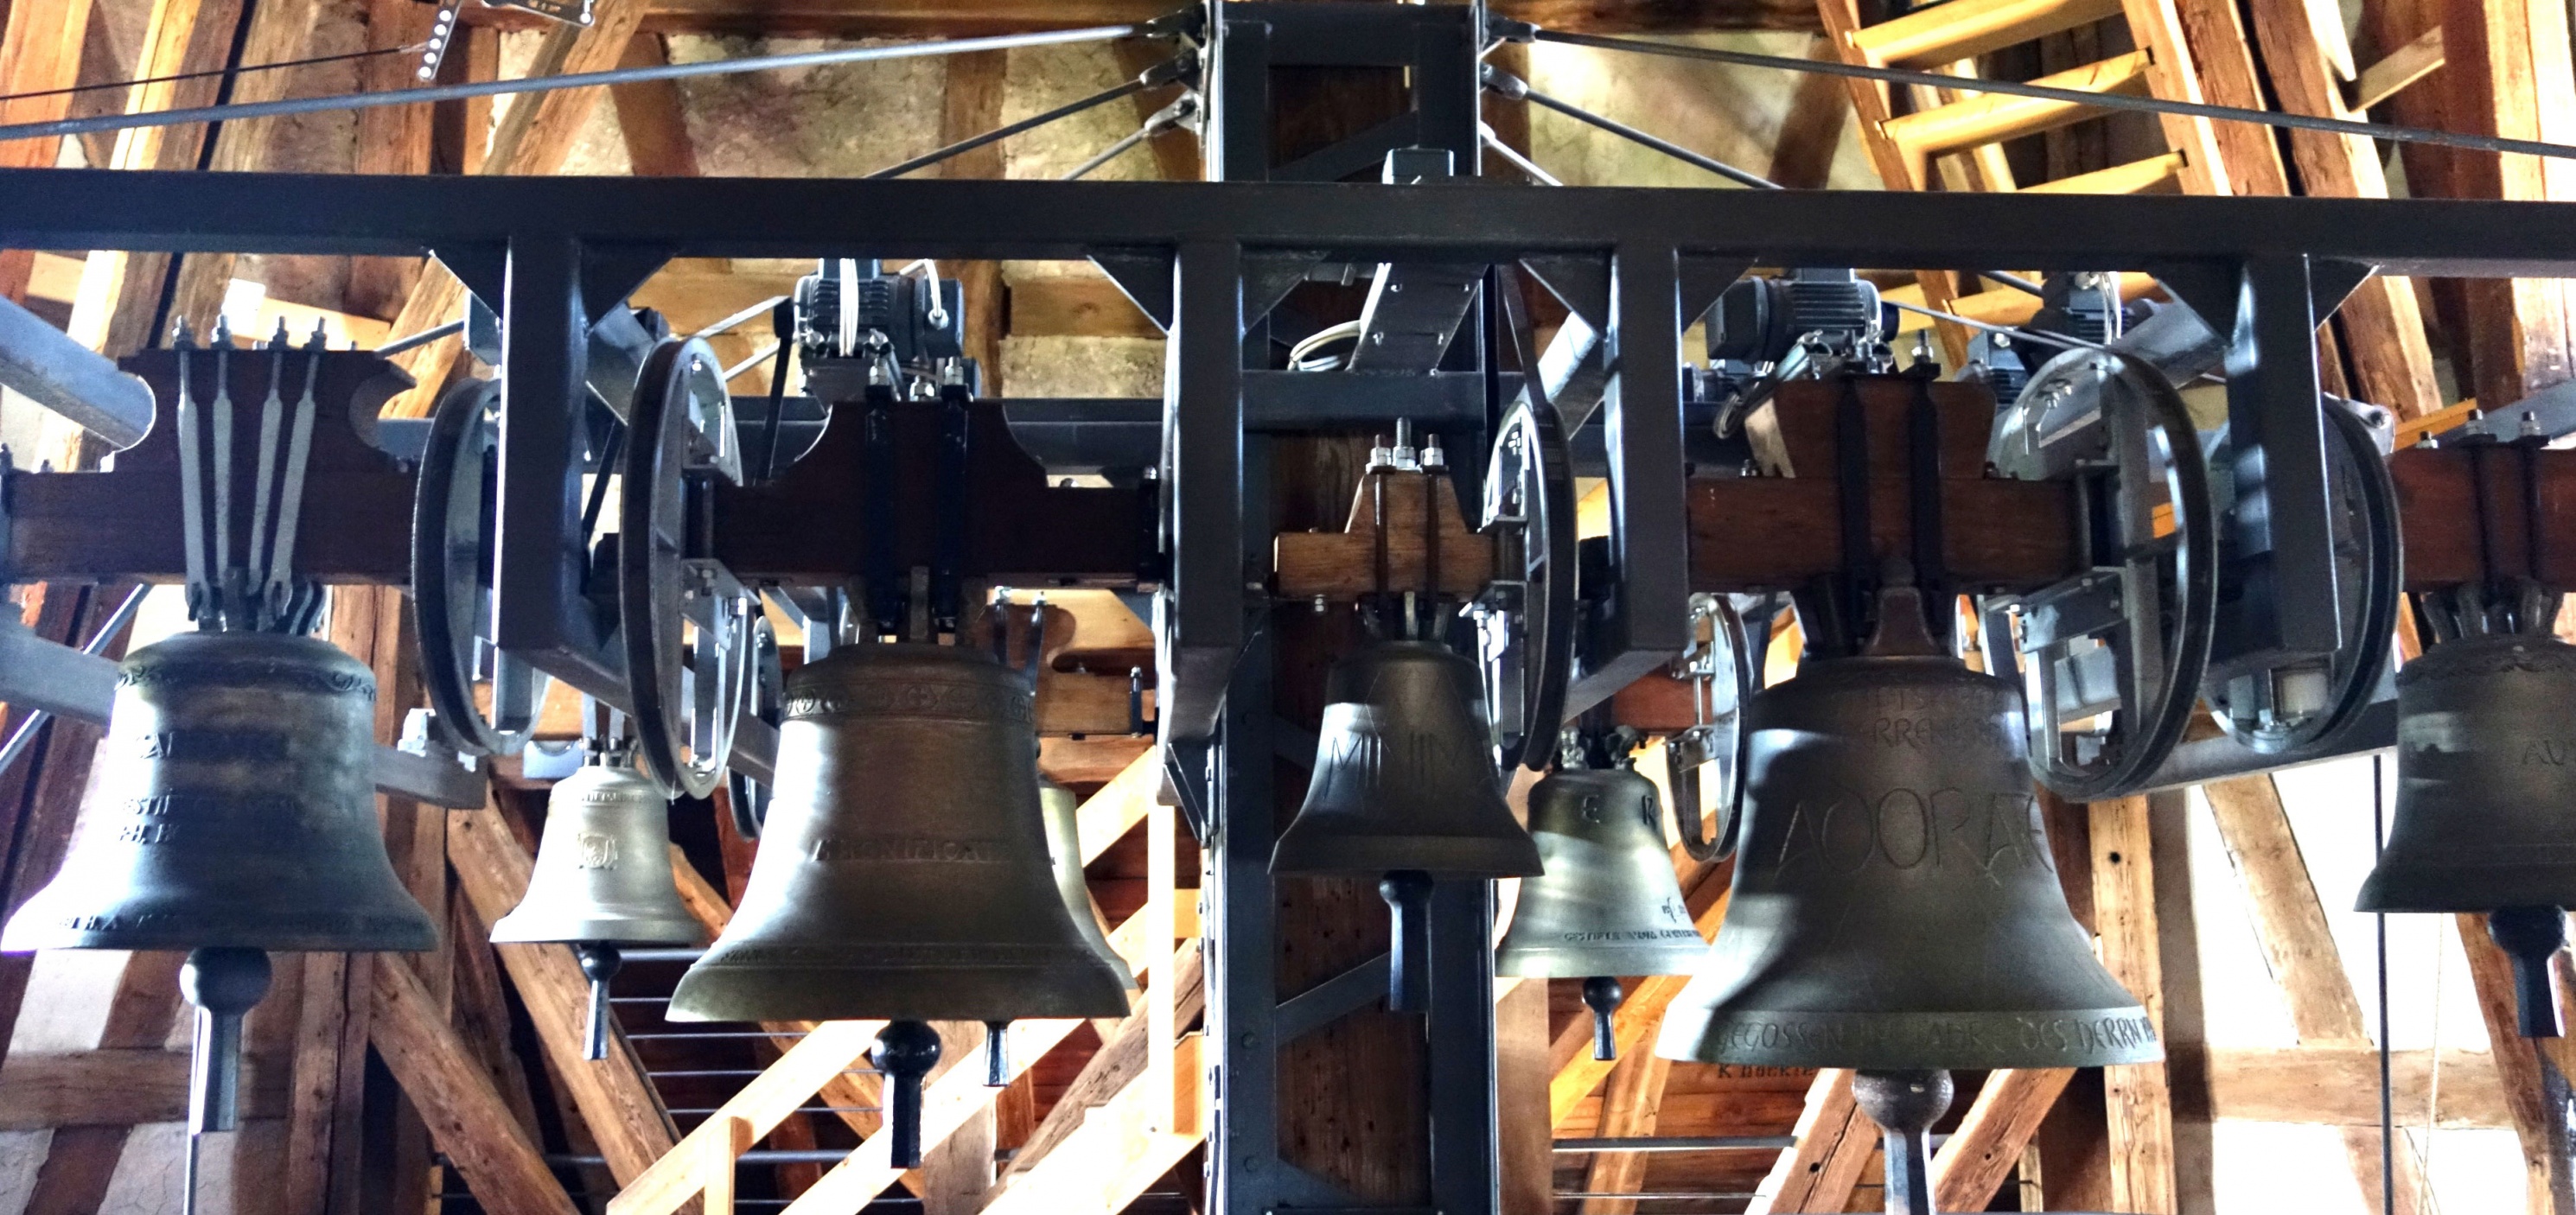 Zimbelglocken (Glockenmuseum Stiftskirche Herrenberg CC BY)